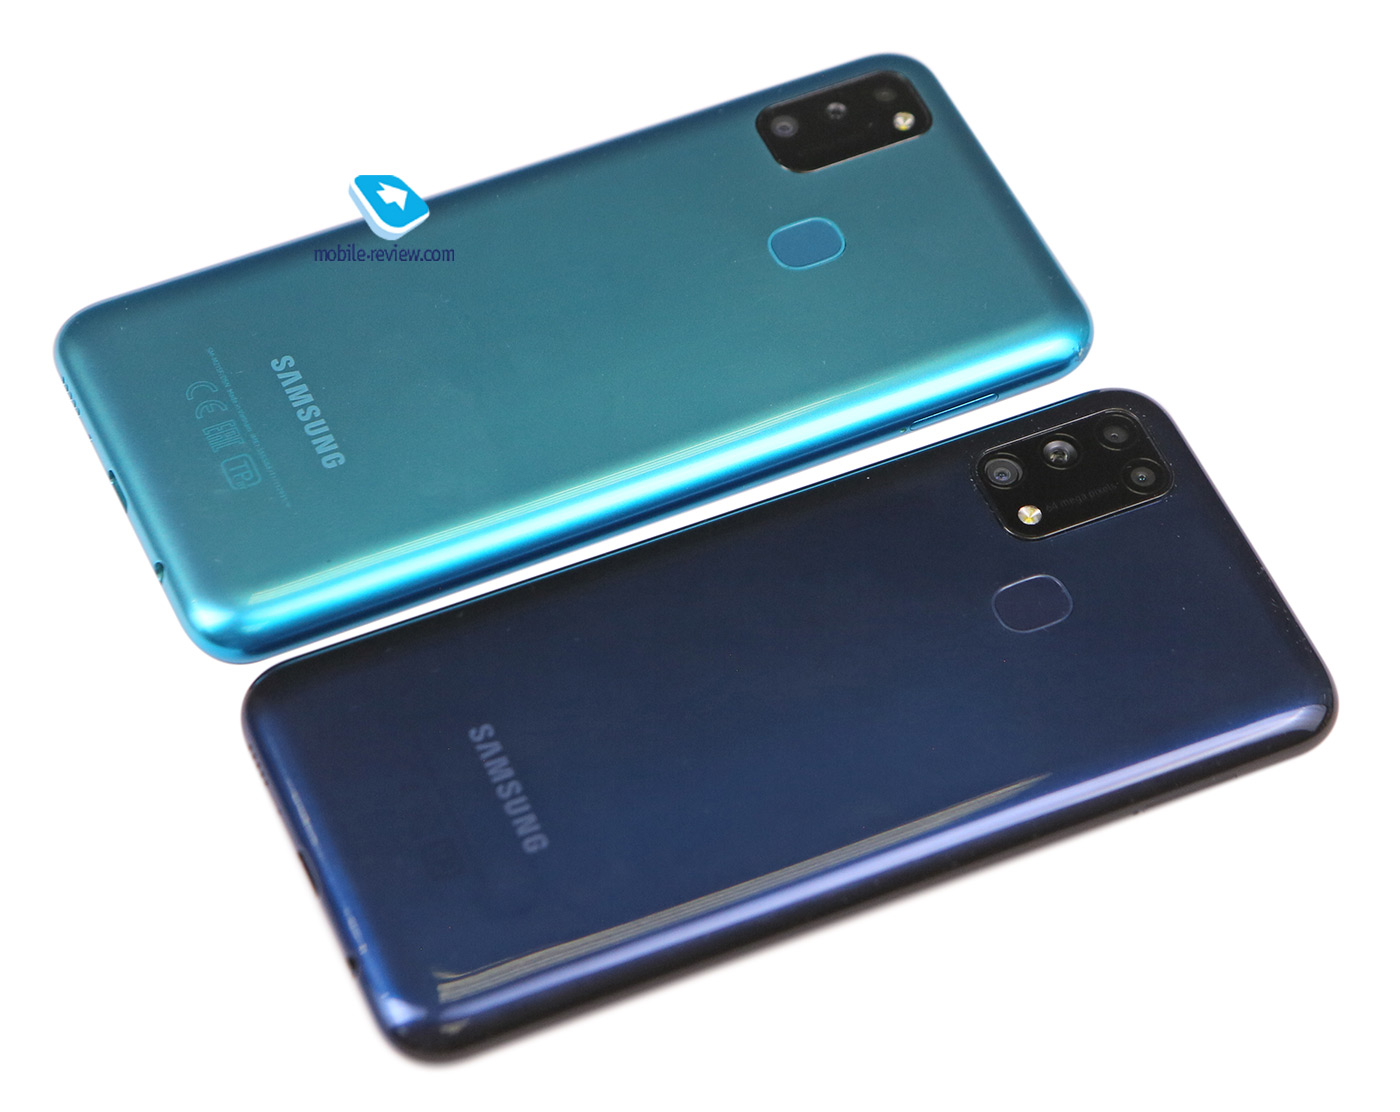 Обзор смартфона Samsung Galaxy M31 (SM-M315F/DS)